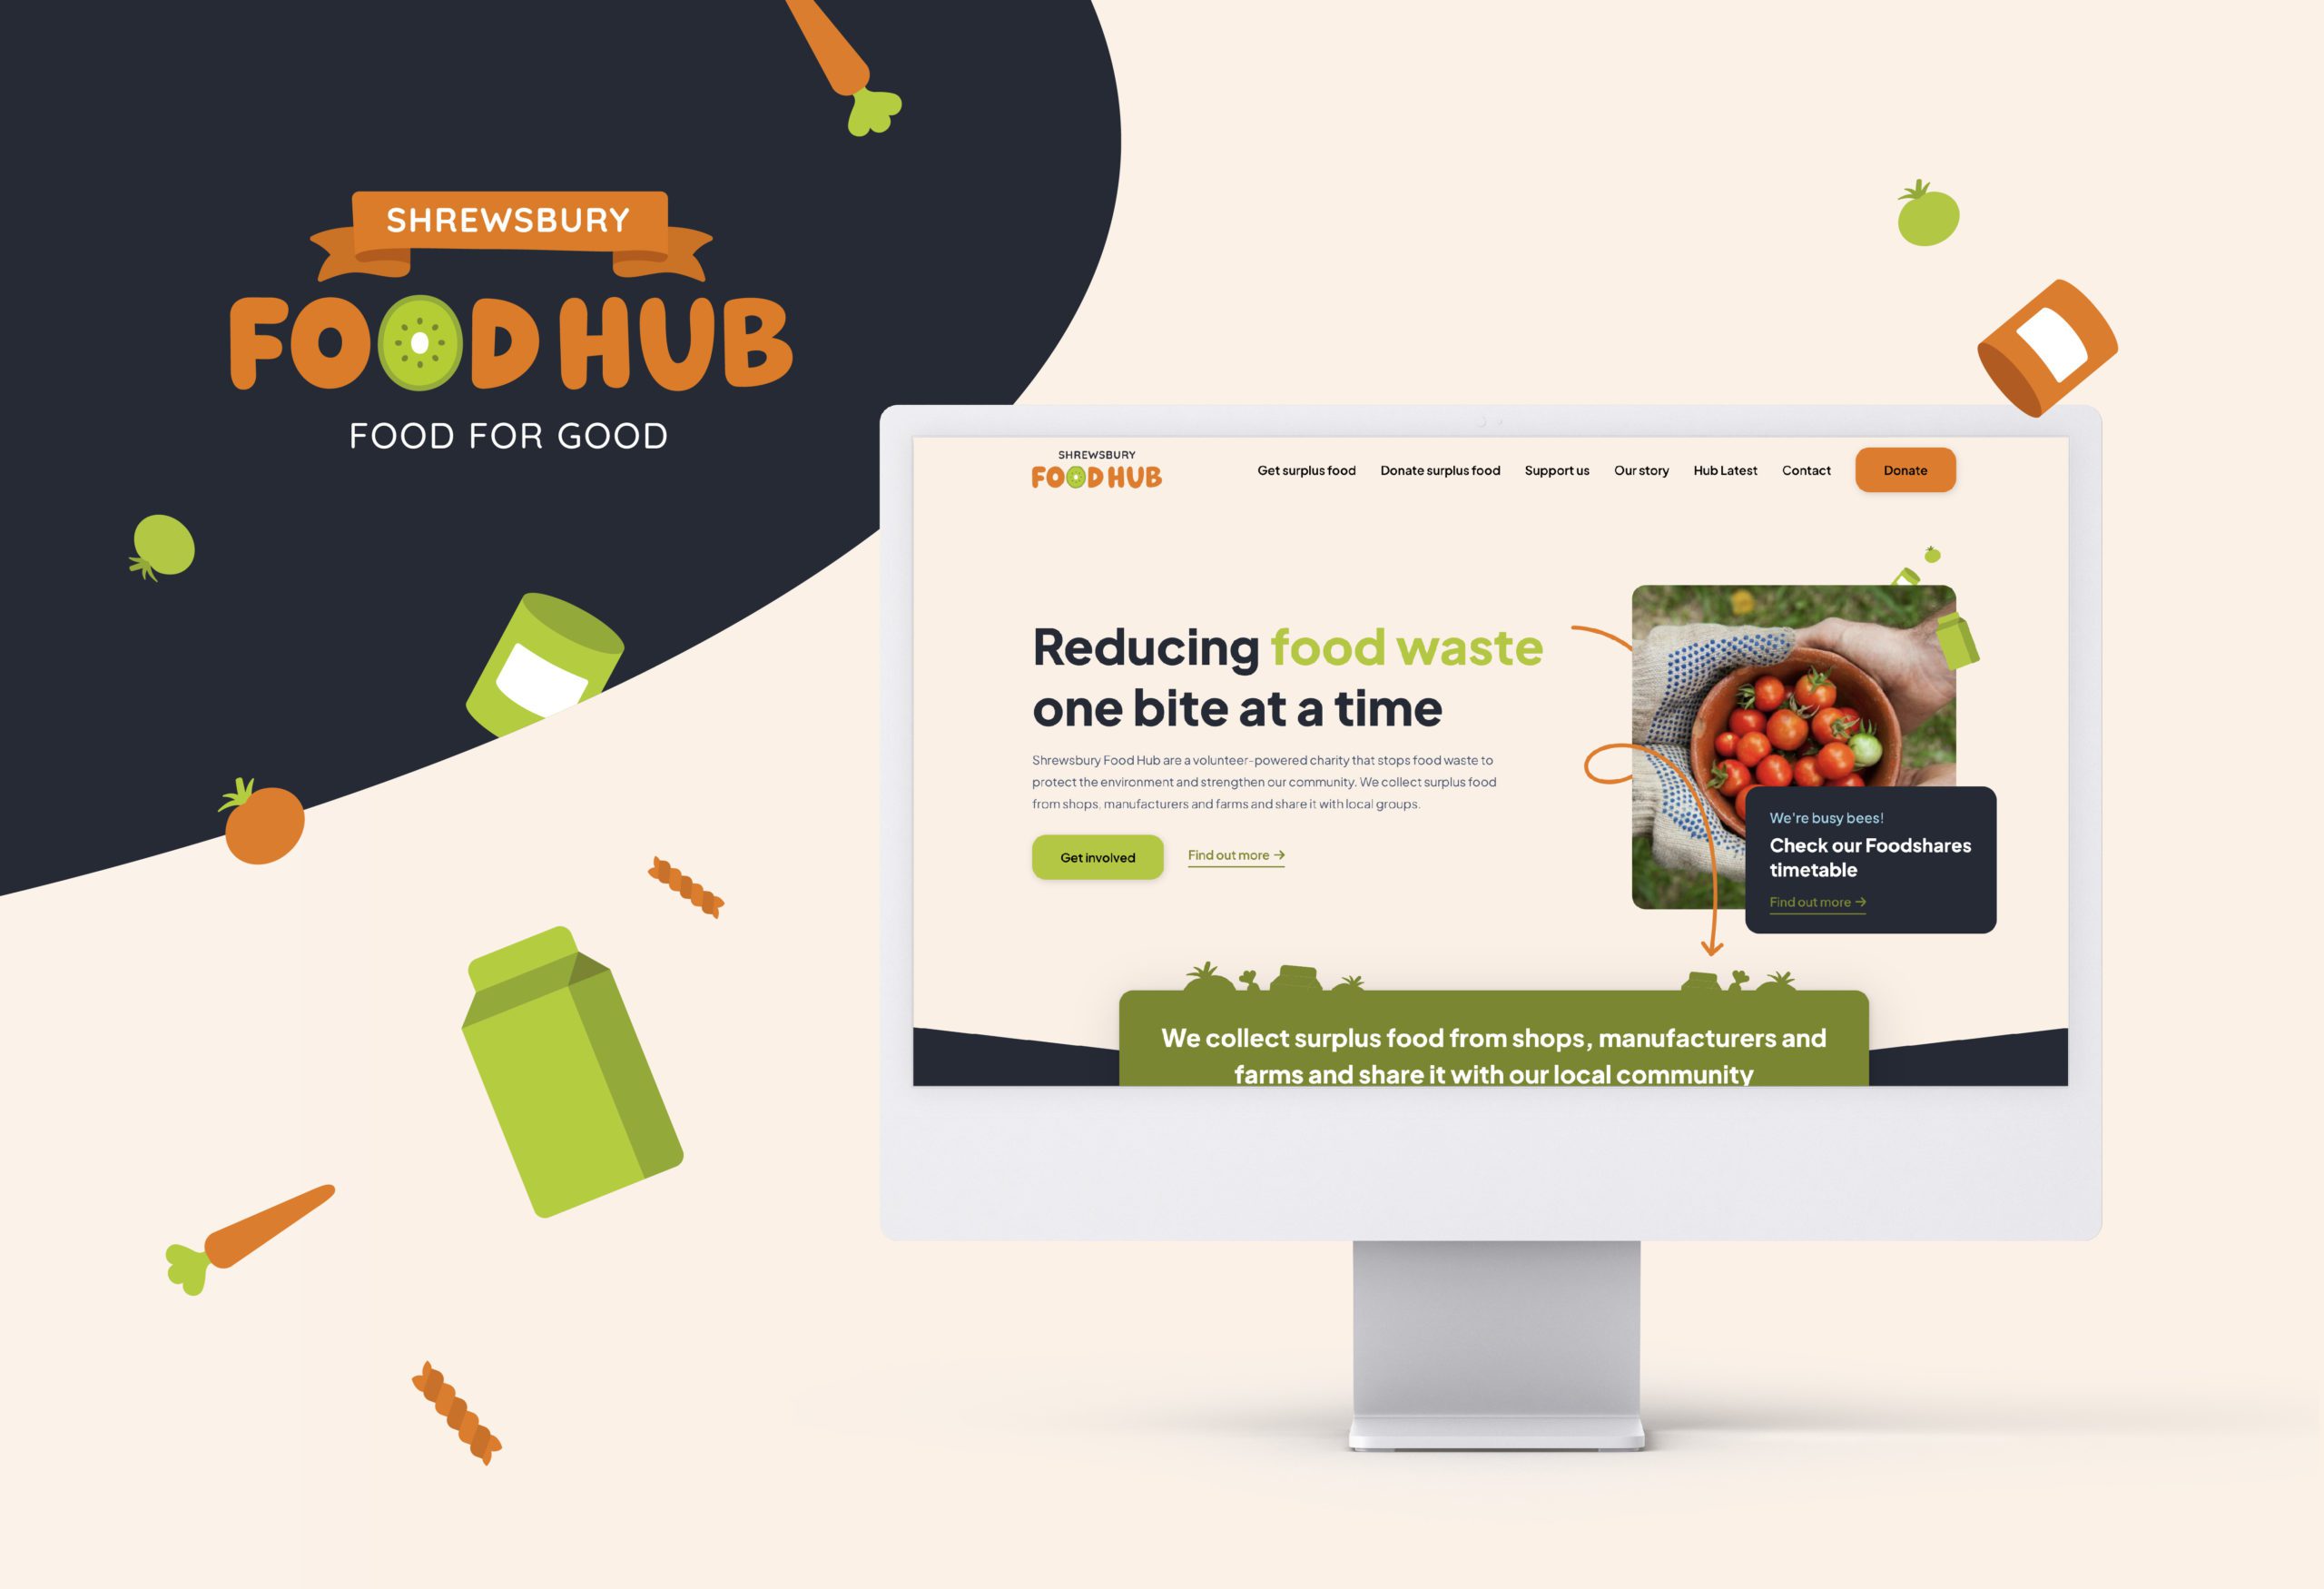 Shrewsbury Food Hub launches new website